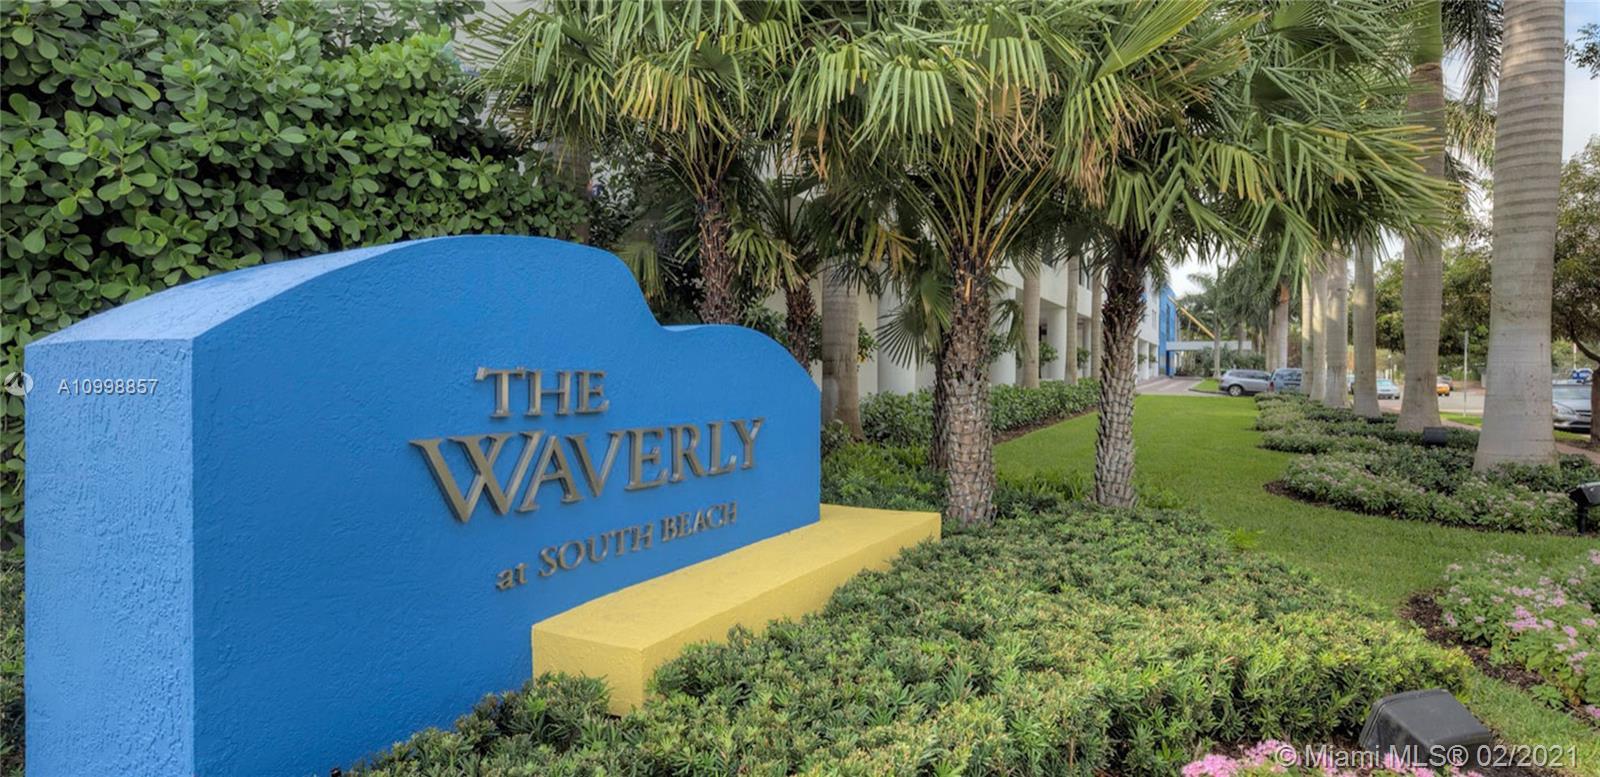 Waverly South Beach - Condos for sale